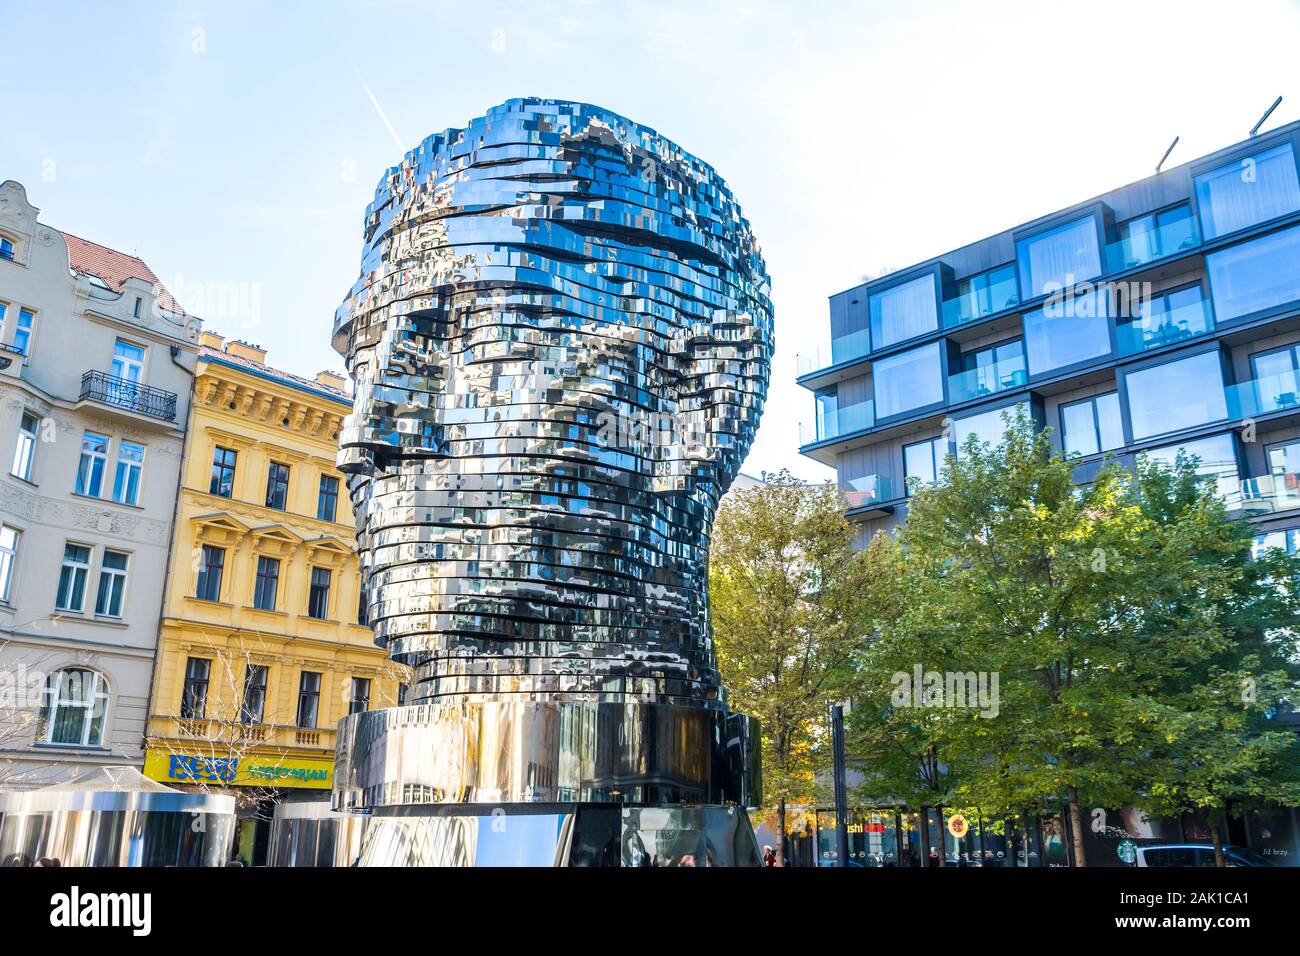 Prague, Czech Republic - October 26, 2019: The Head of Franz Kafka, also known as the Statue of Kafka. Outdoor sculpture by artist David Cerny, situat Stock Photo